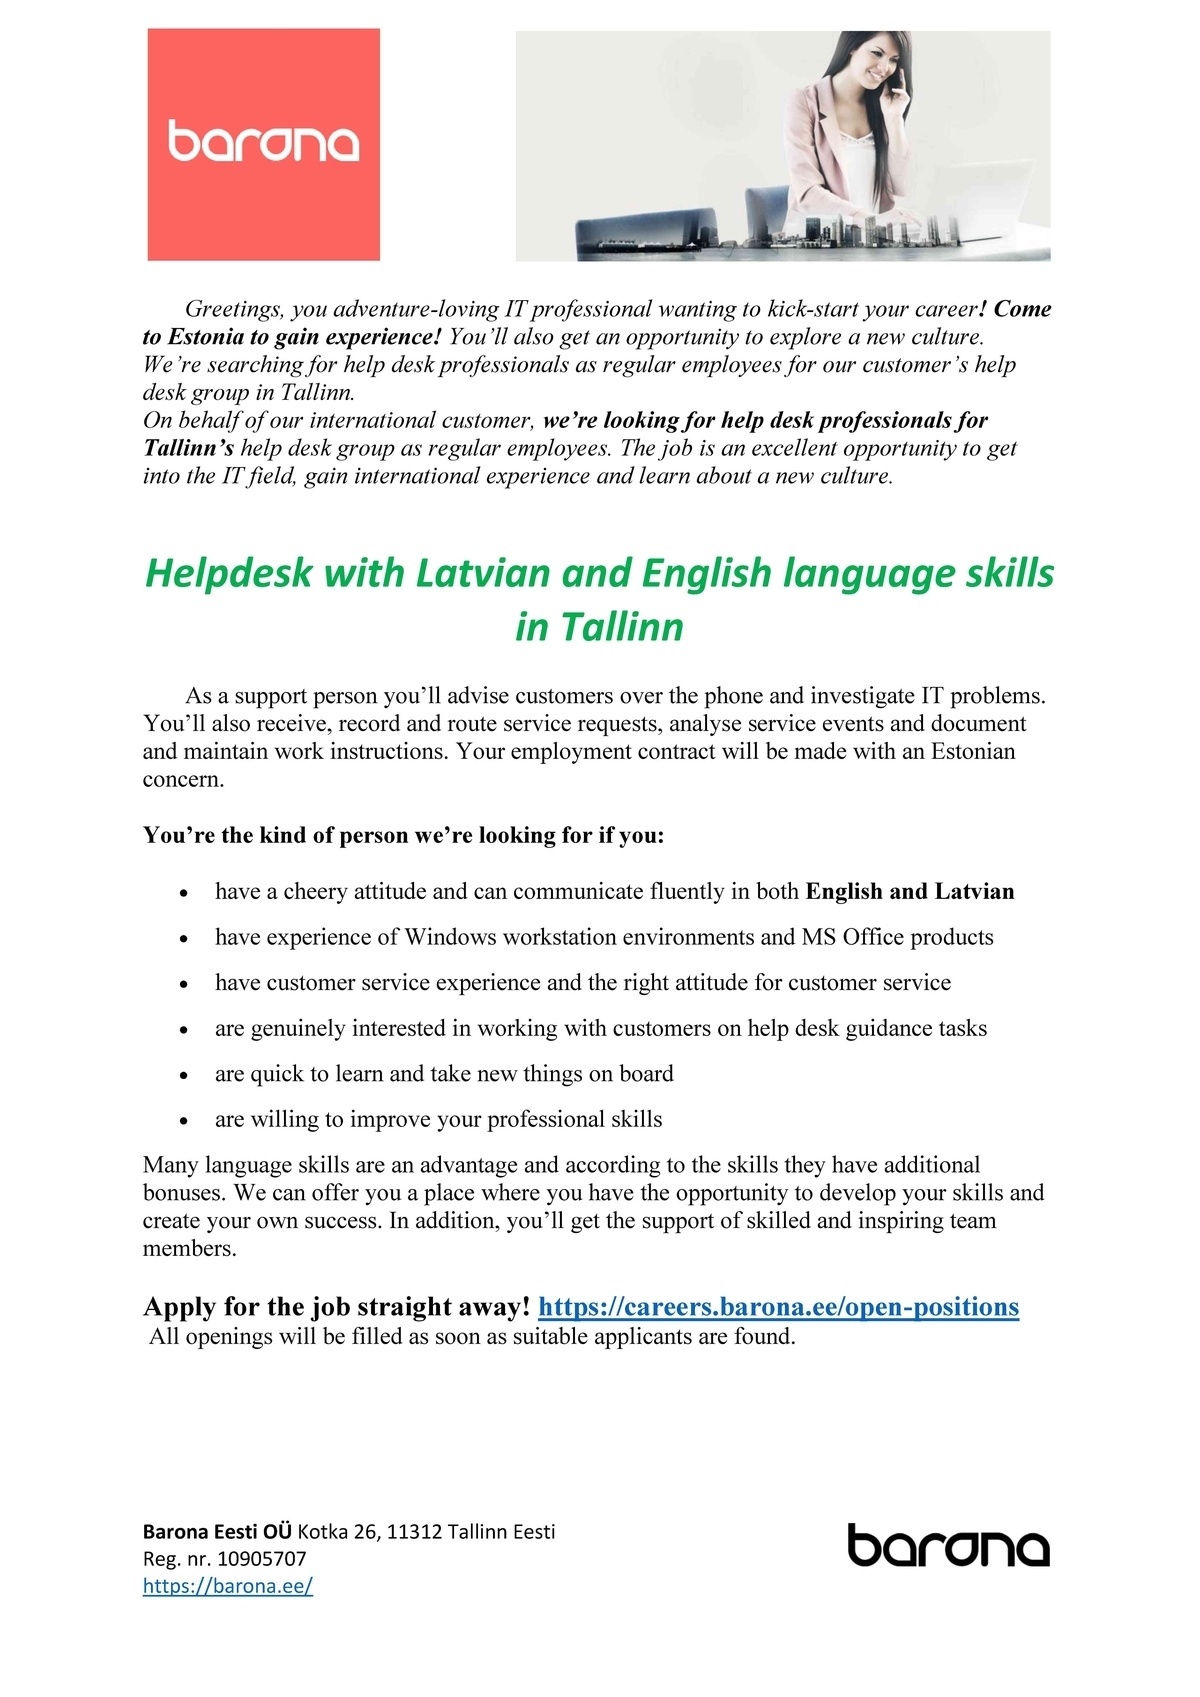 Barona Eesti OÜ Helpdesk with Latvian and English language skills in Tallinn